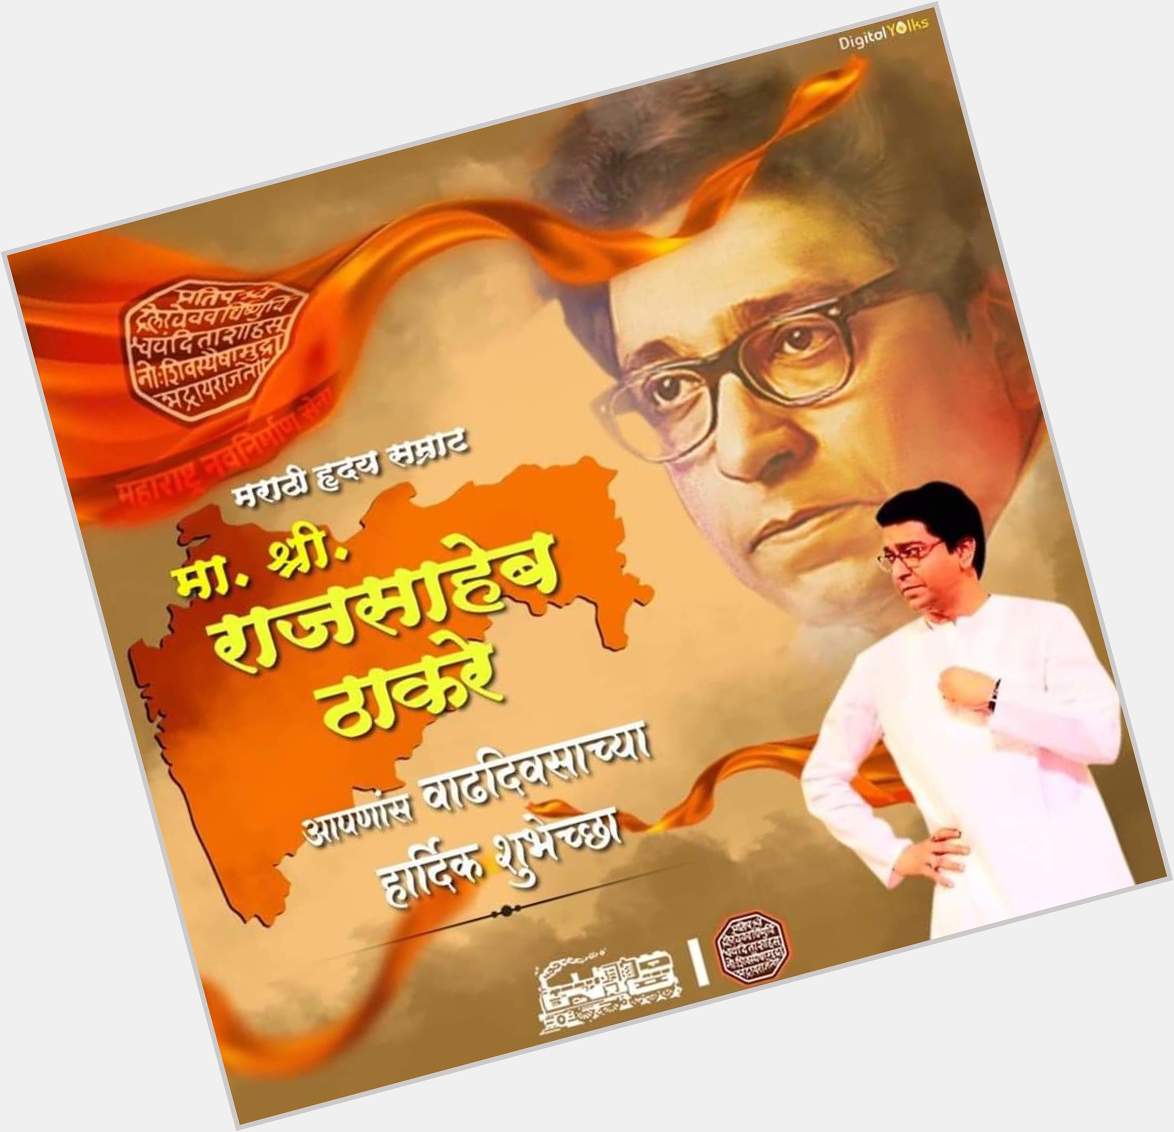 Happy Bday to our Maharashtra Navnirman Sena President
Maratha Samrat
Shri. Raj Thackeray Shaheb 